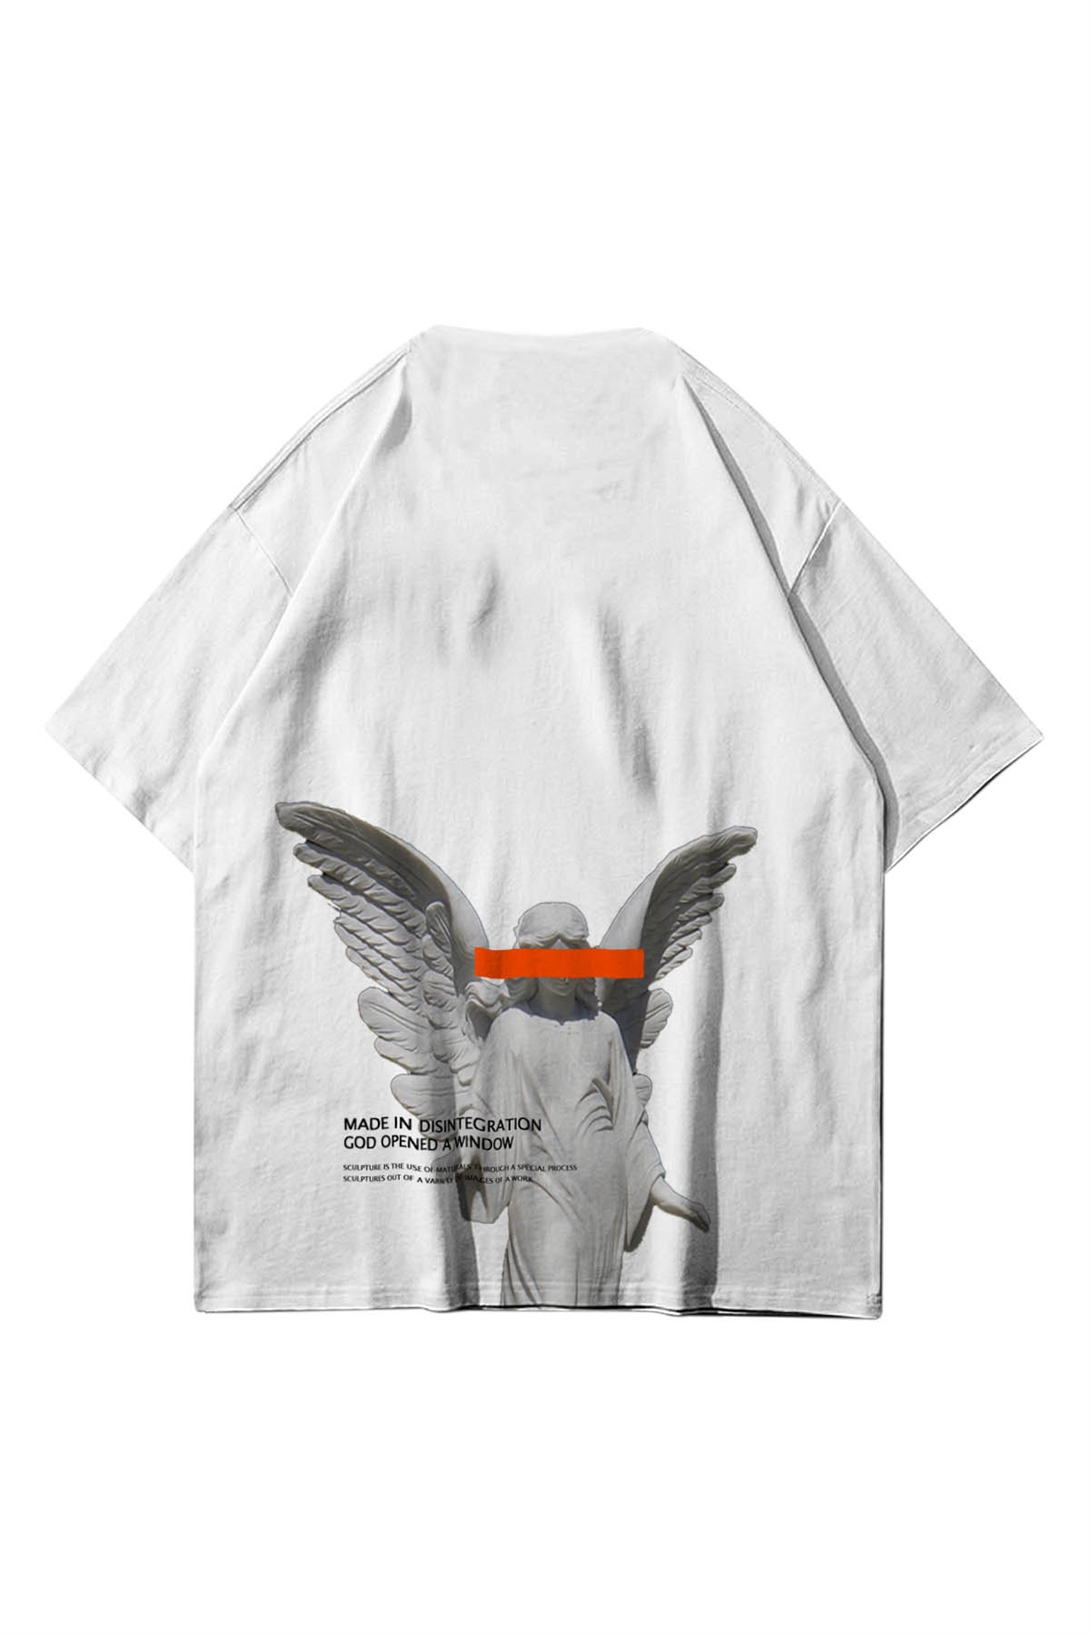 Trendiz Unisex Made in Disintegration Beyaz Tshirt